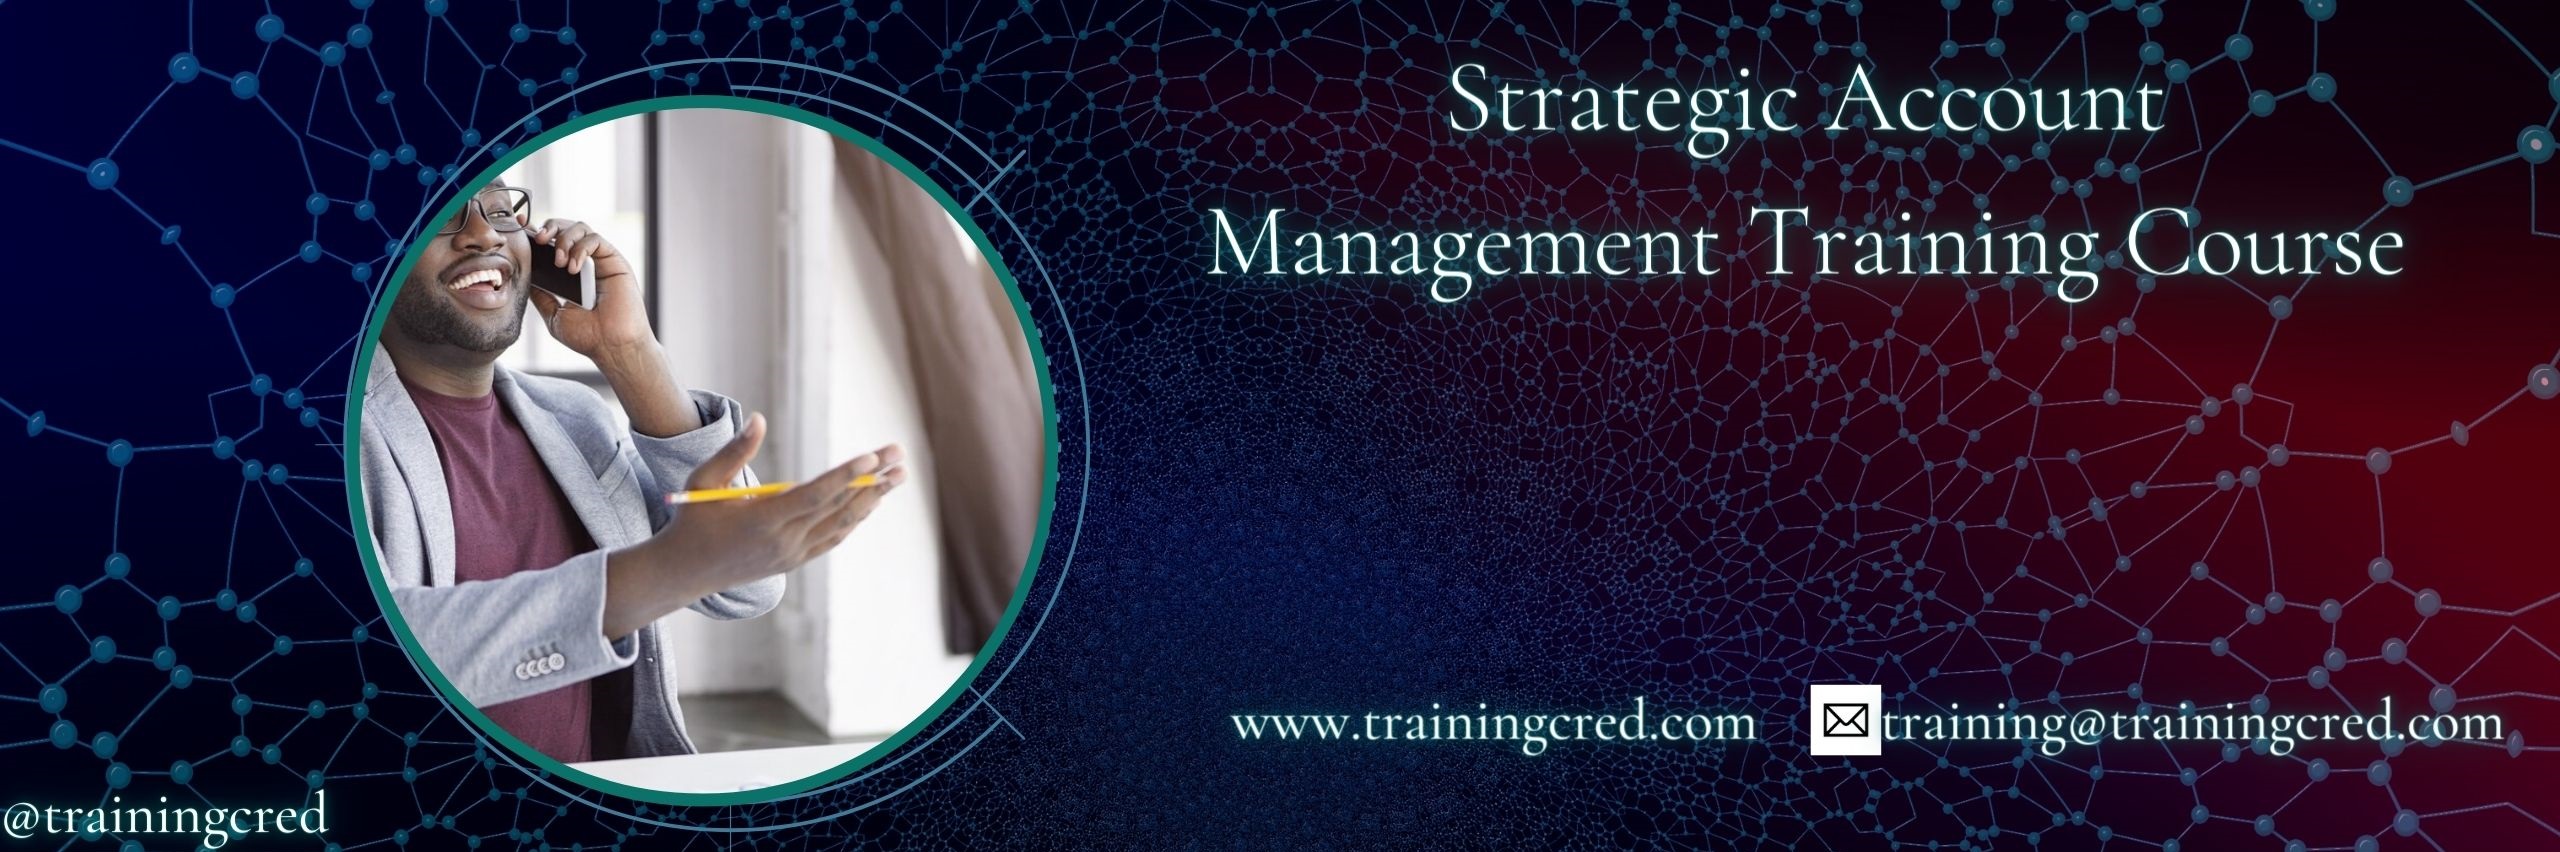 Strategic Account Management Training